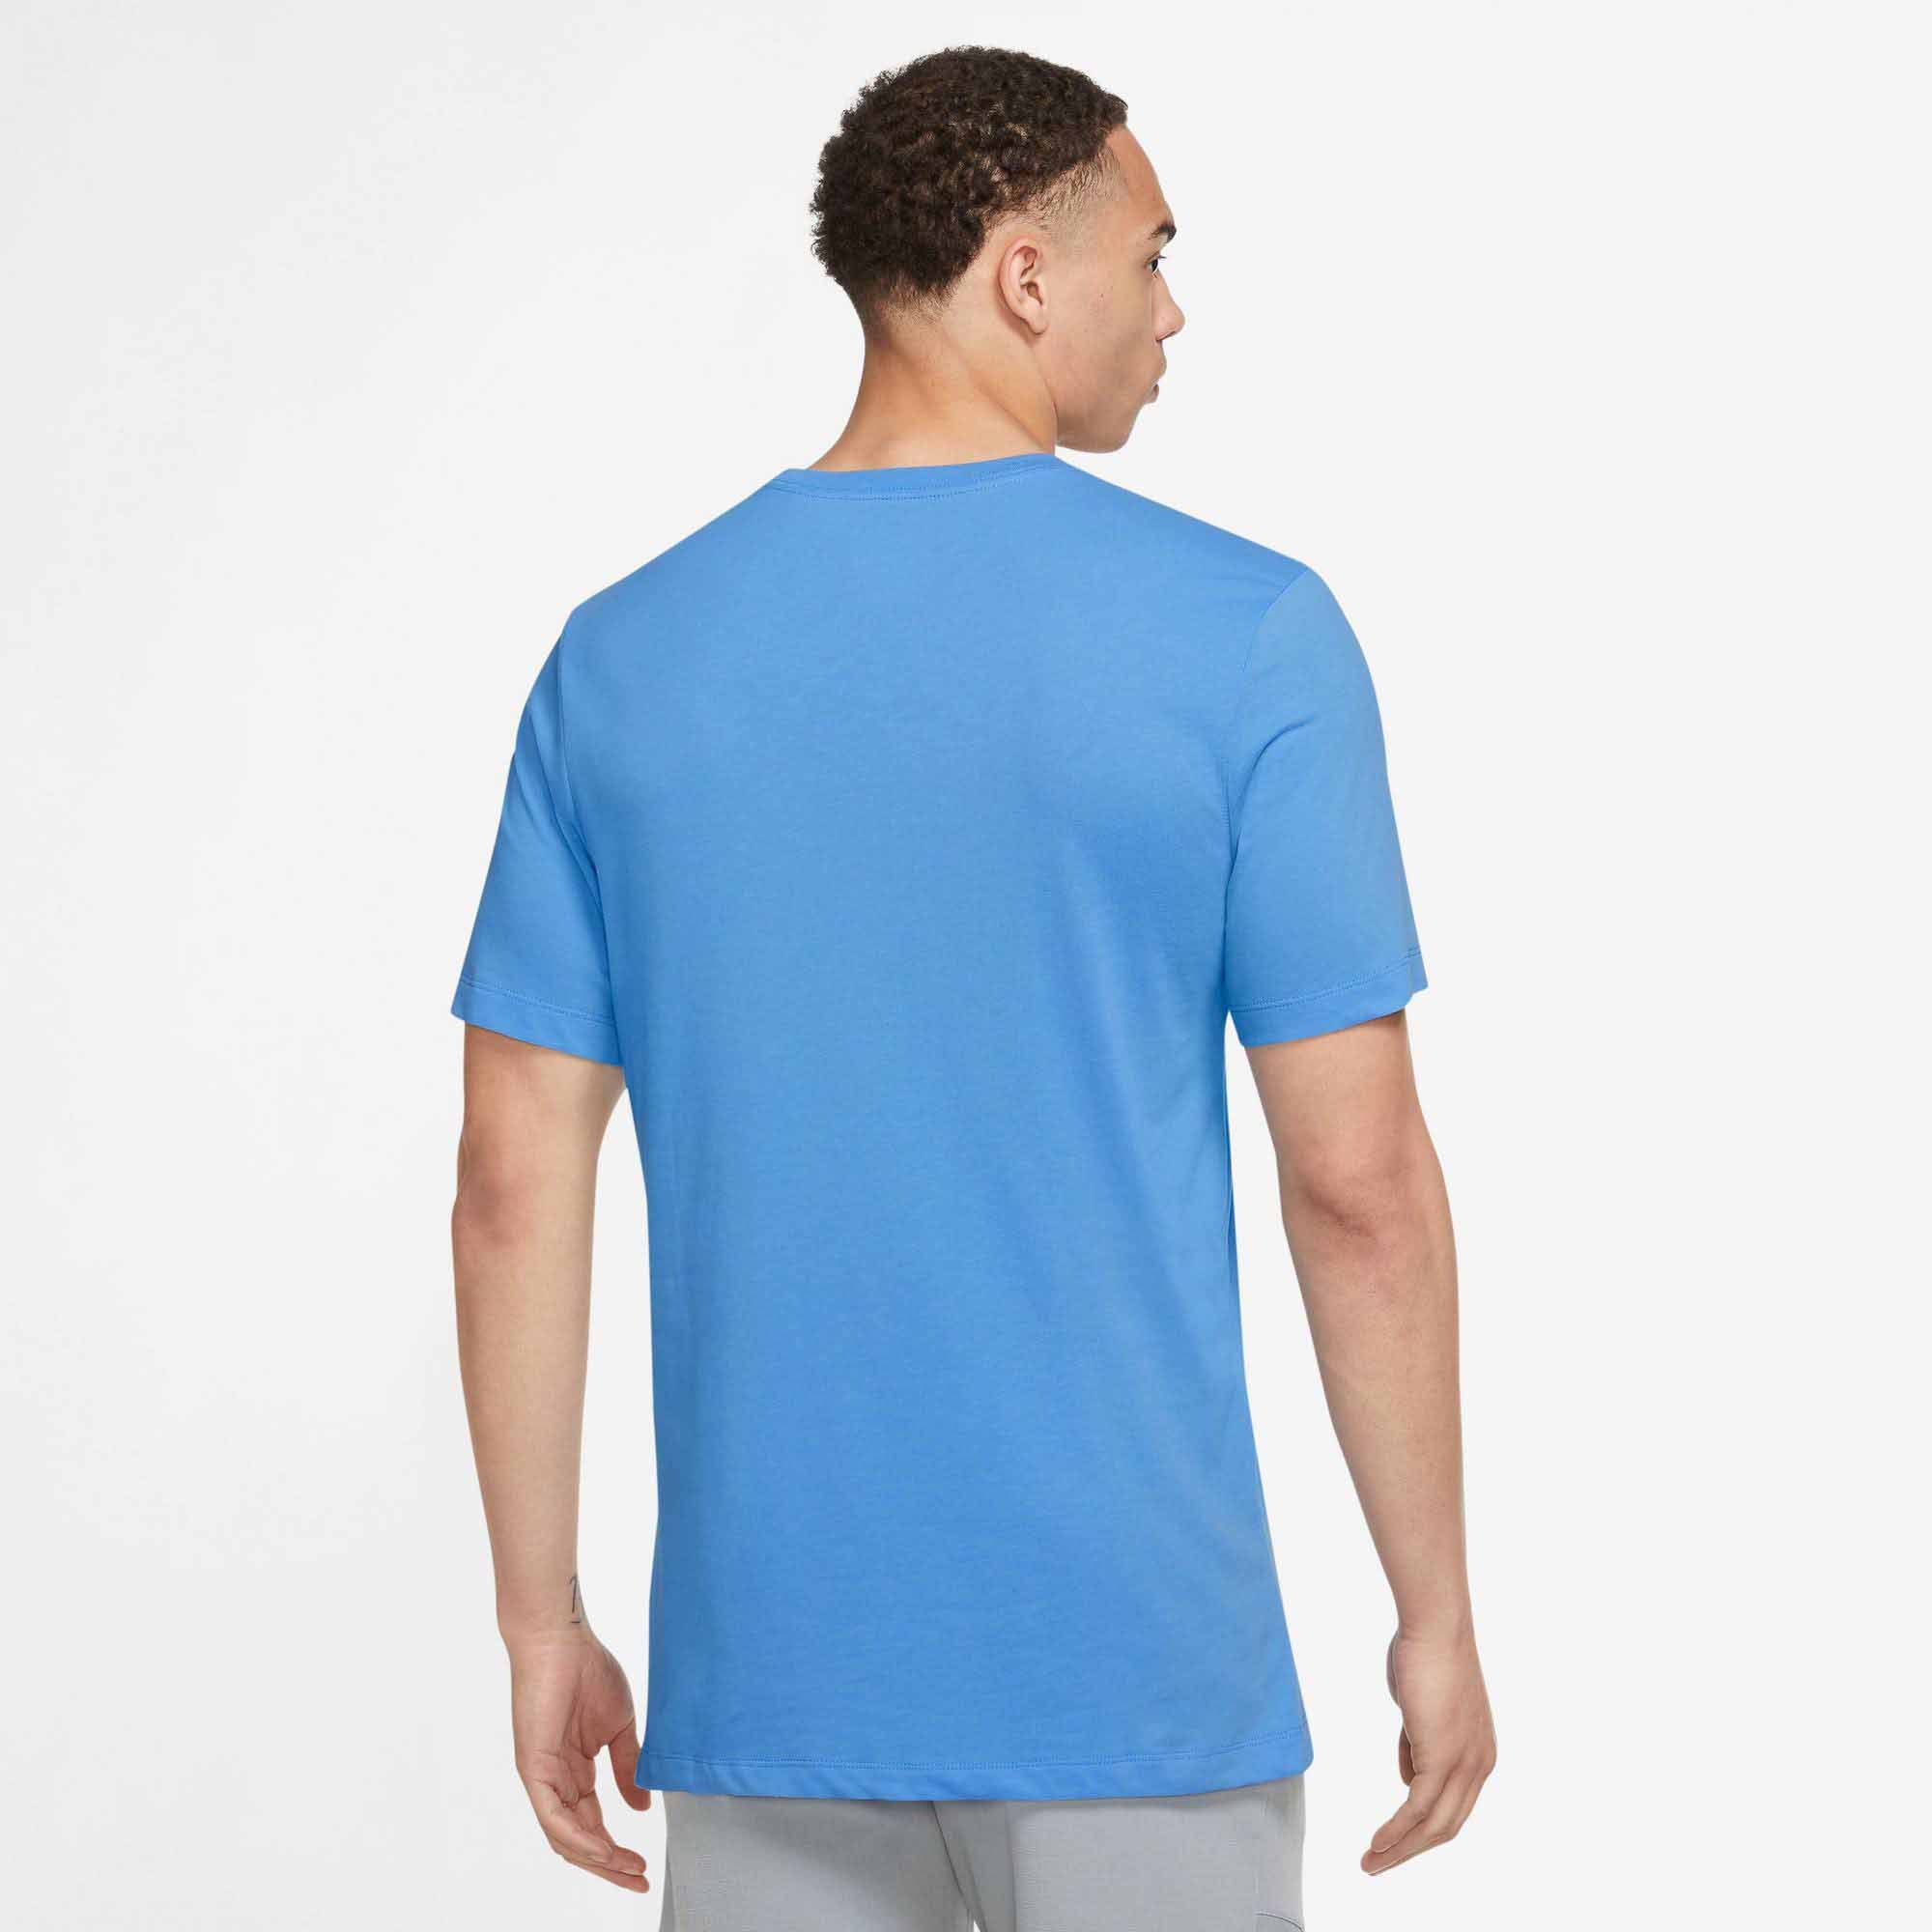 Camiseta Nike Fitness Dri-Fit